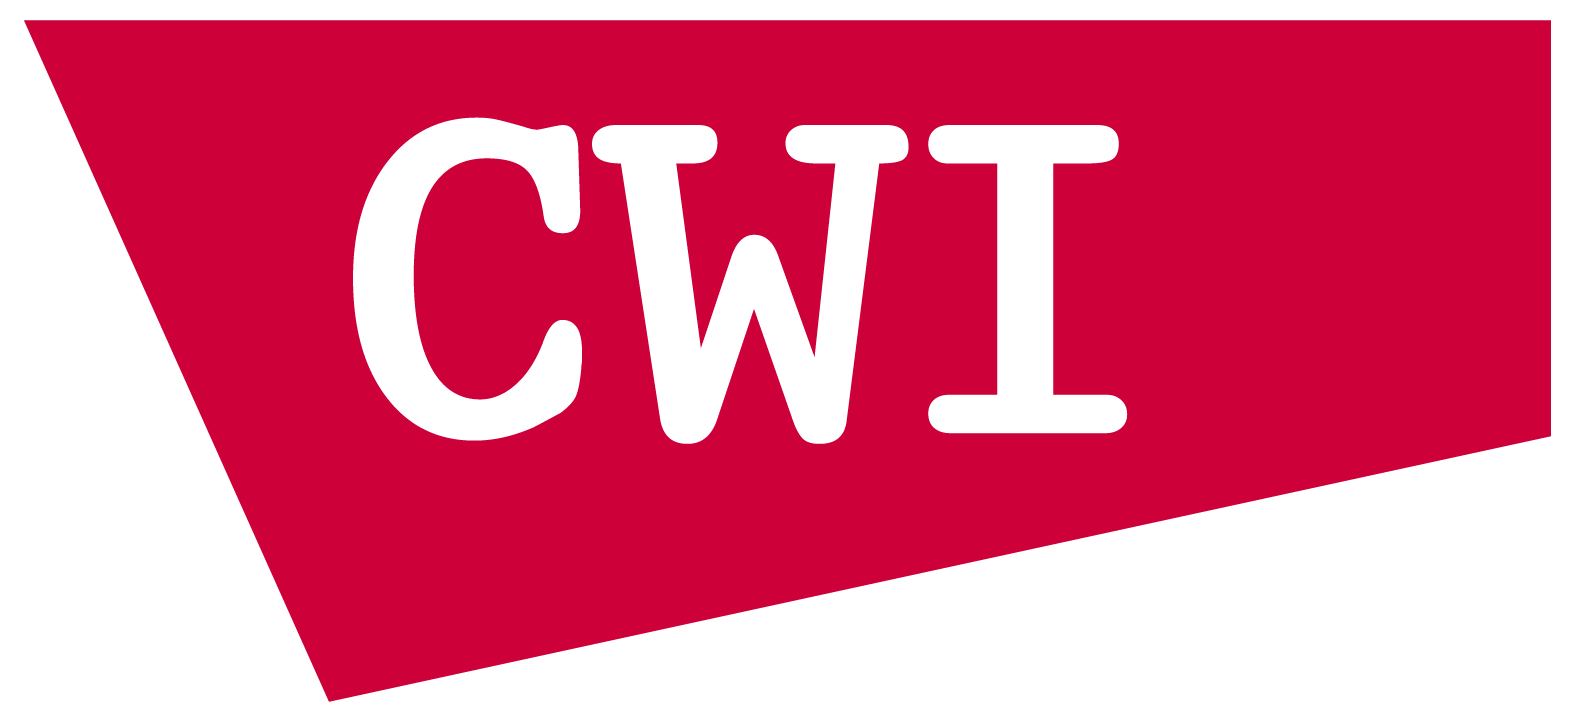 CWI (Centrum Wiskunde & Informatica), Amsterdam